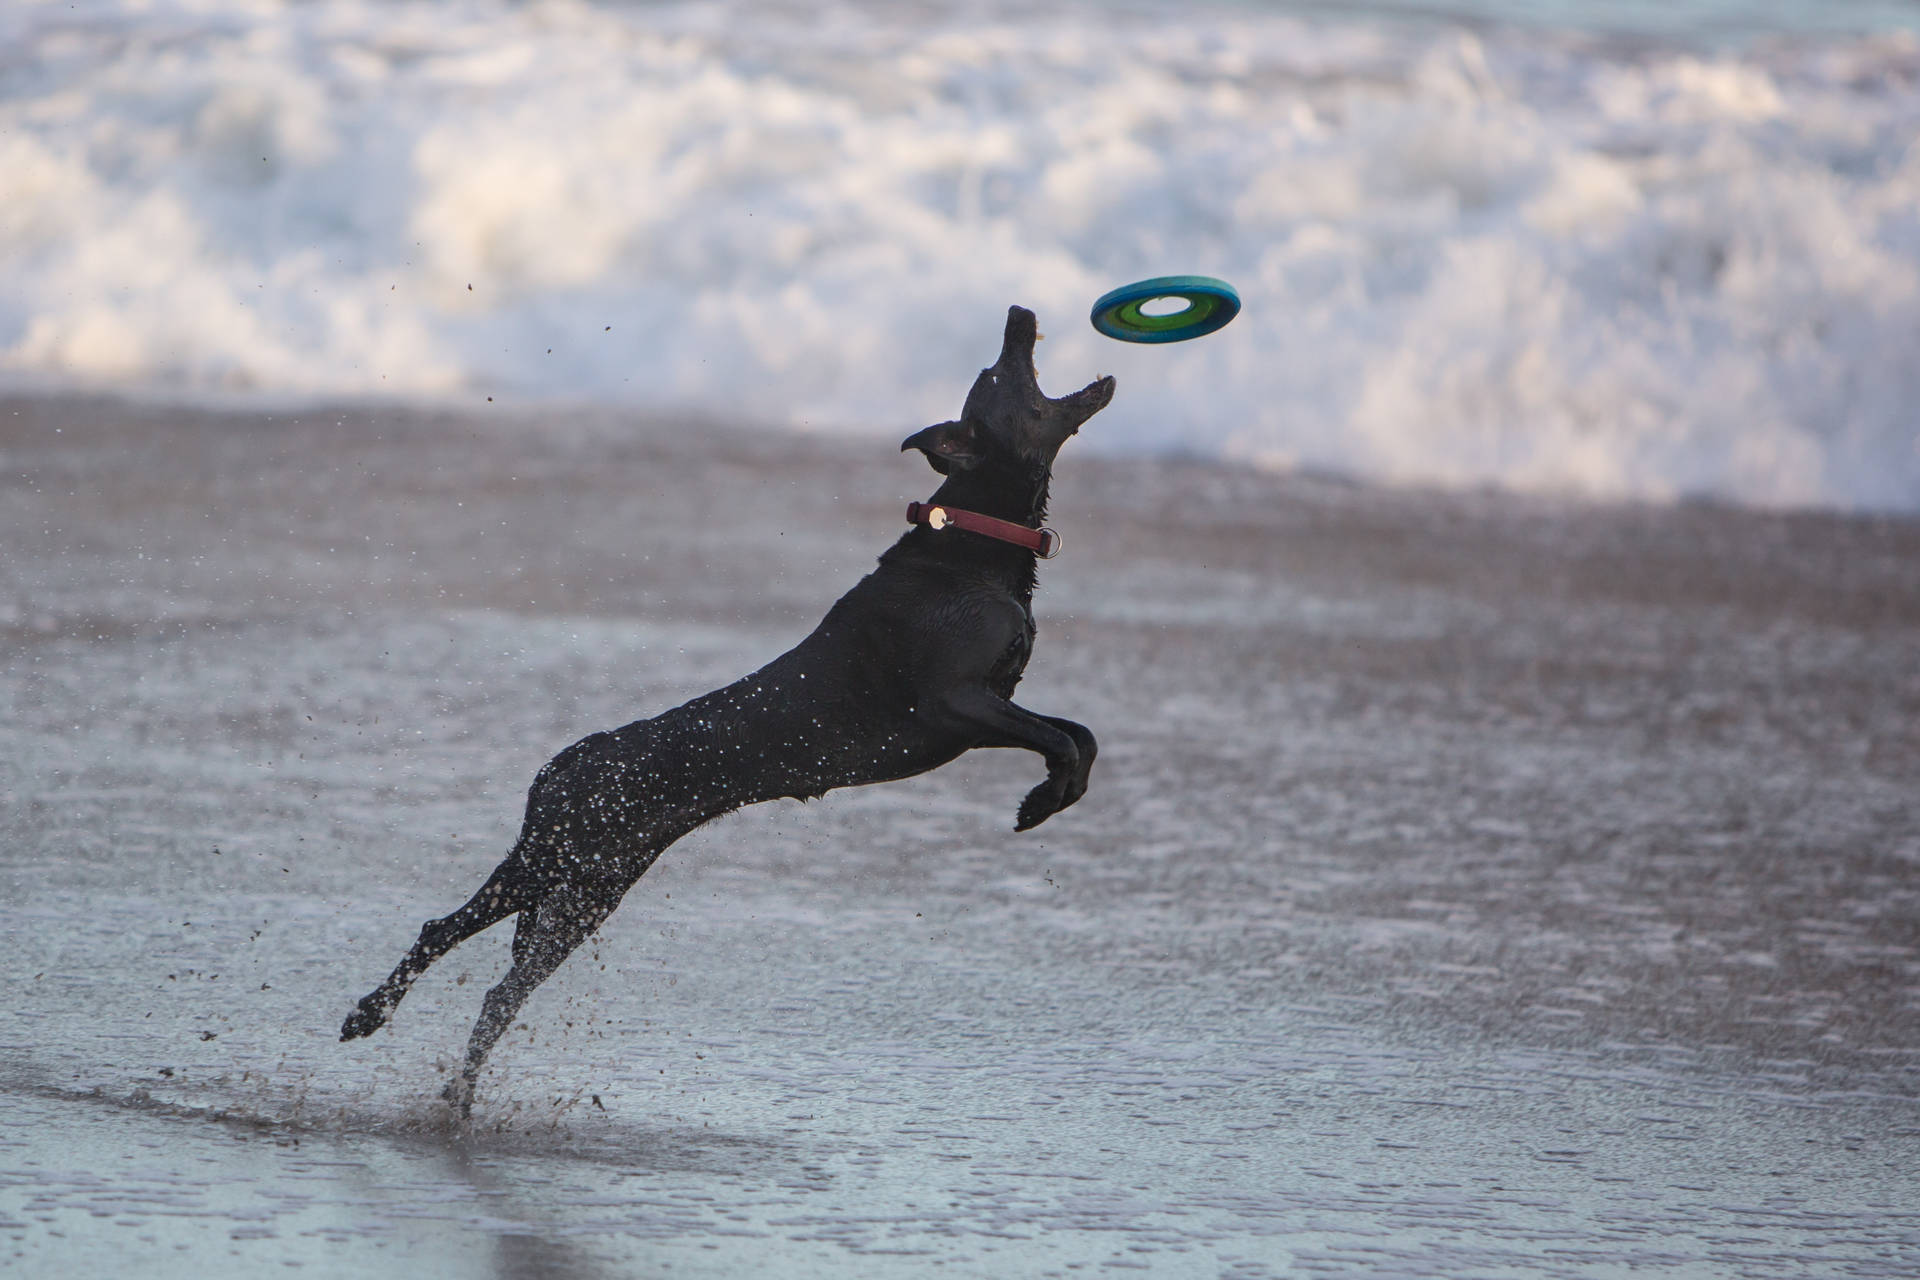 Black Dog Playing Frisbee